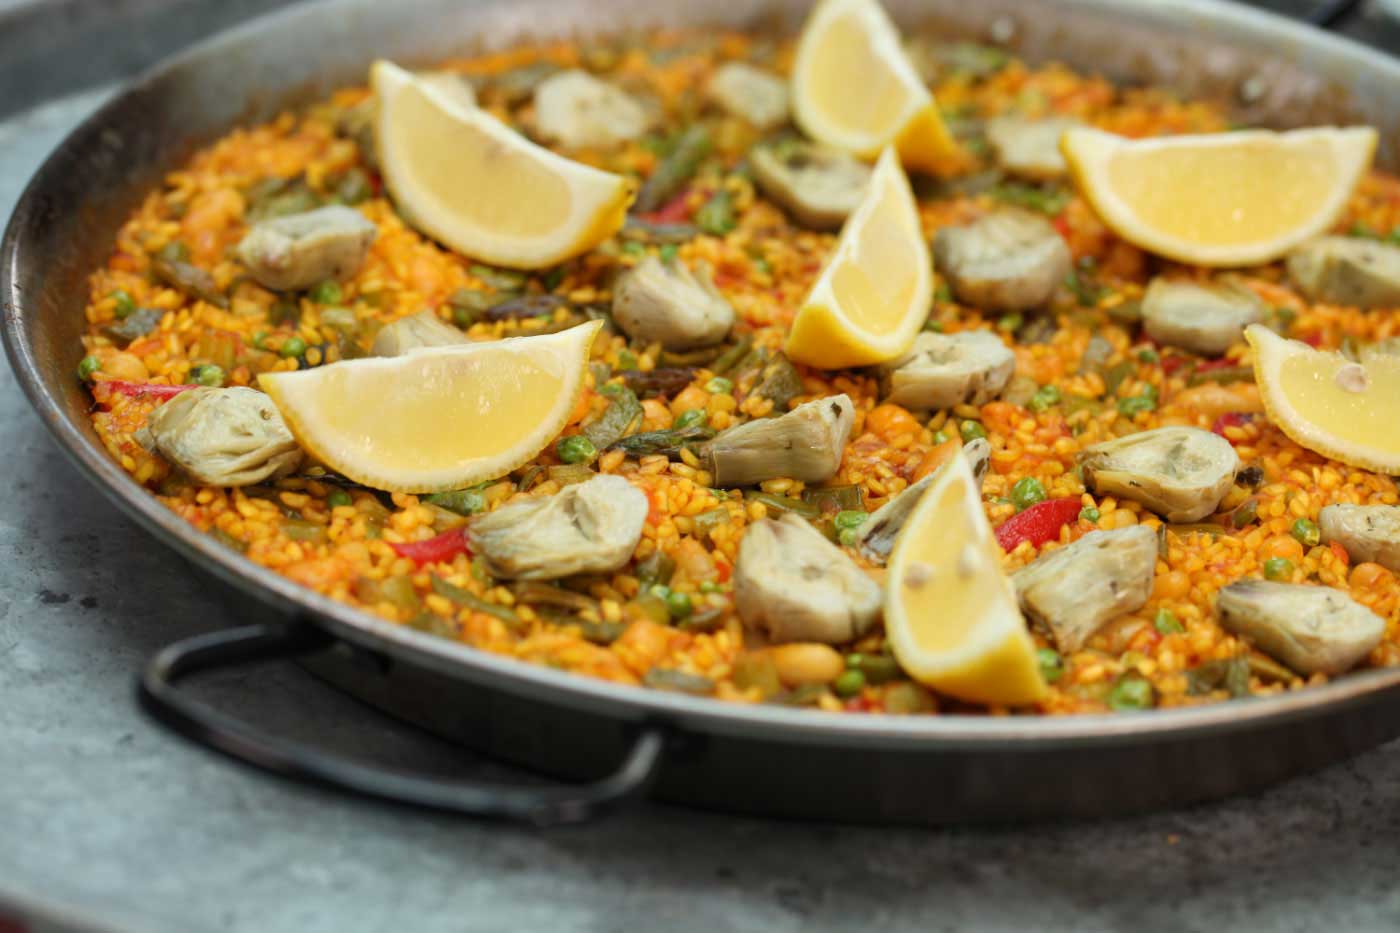 https://www.bascofinefoods.com/wp-content/uploads/2018/09/vegetarian-paella-1.jpg